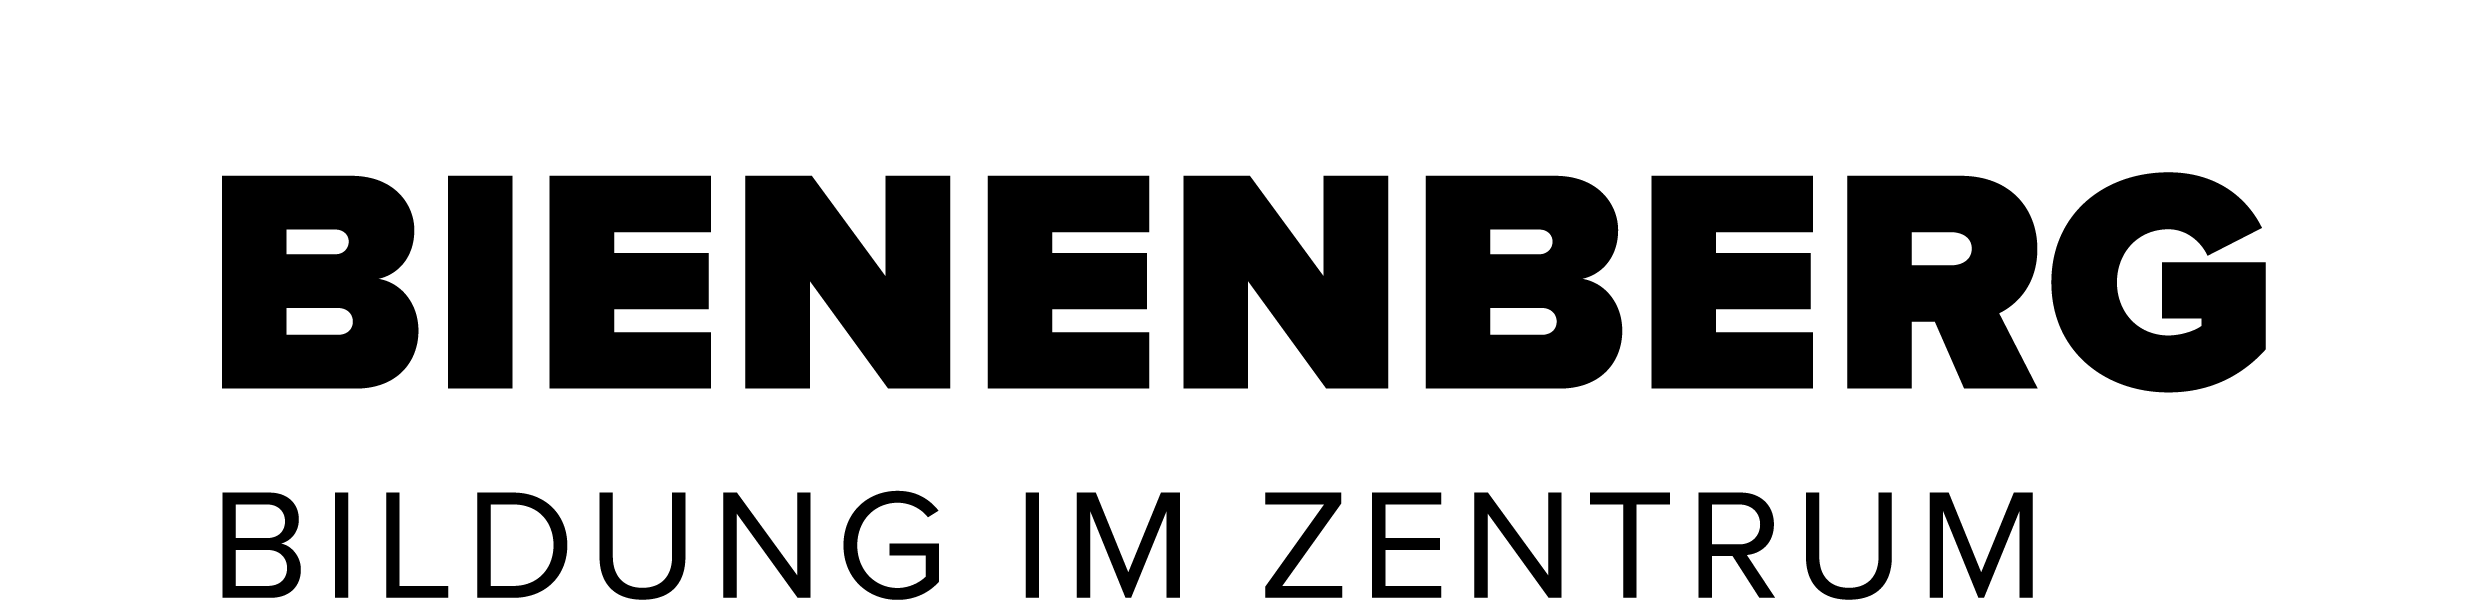 logo-bienenberg-bildungimzentrum-web_orig